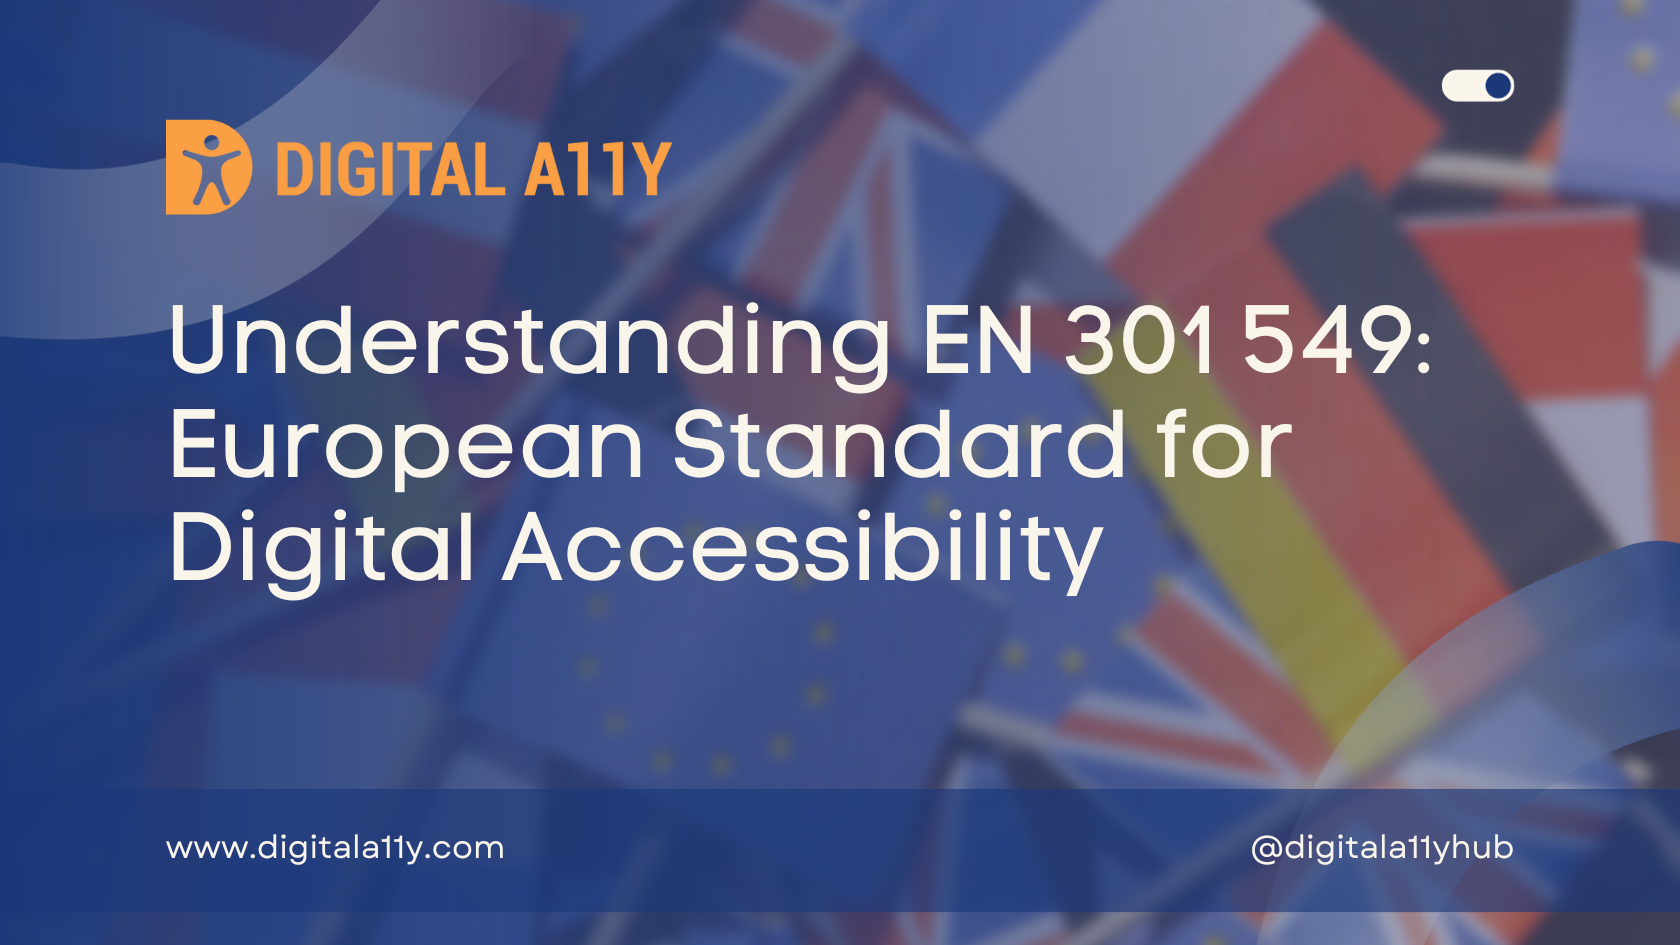 Understanding EN 301 549 European Standard for Digital Accessibility